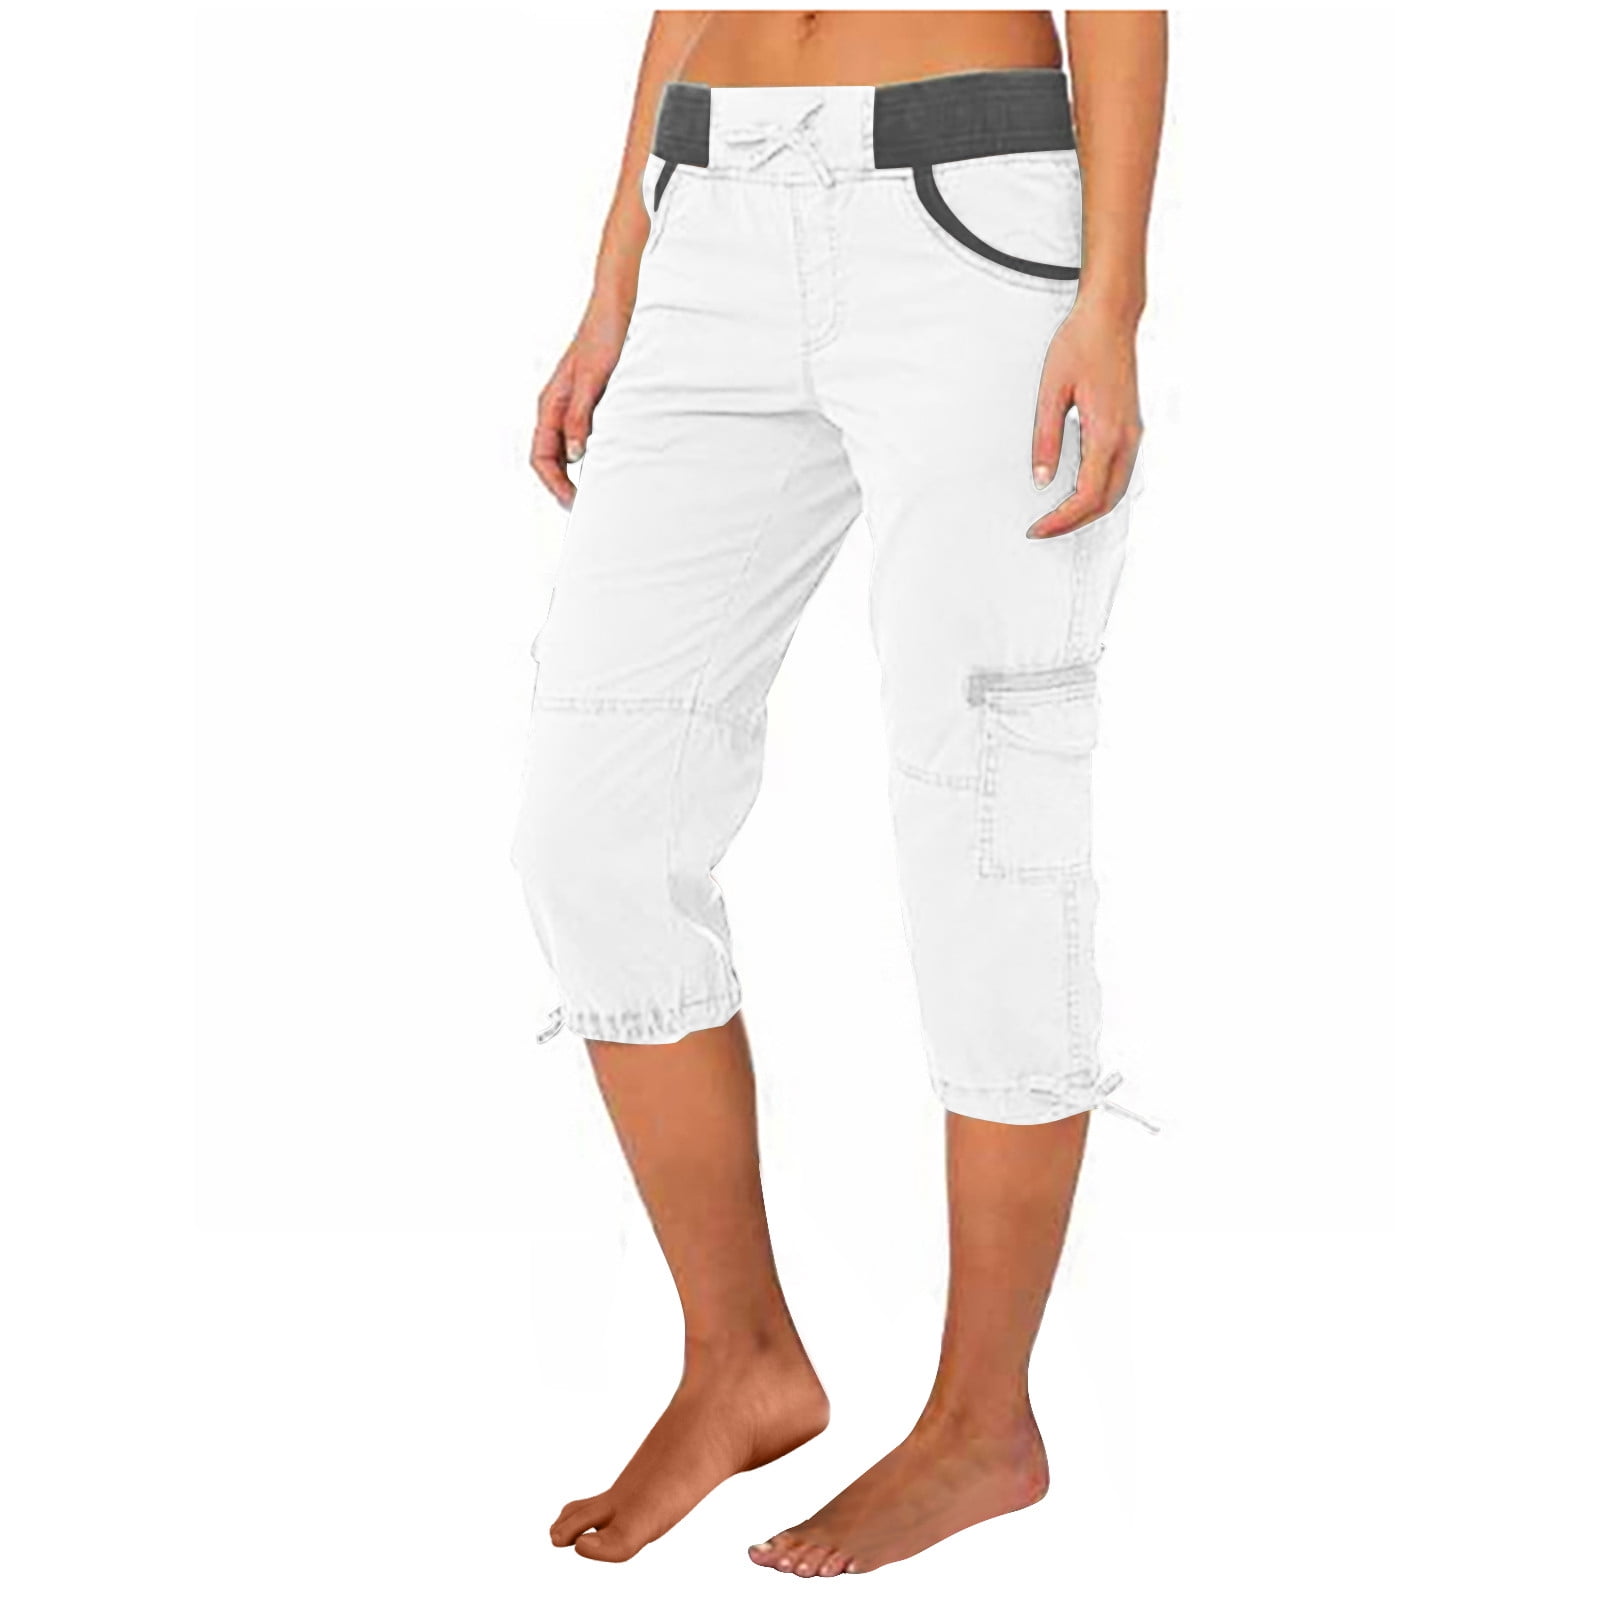 Capri Pants for Women Workout Cargo Pants 3/4 Length Summer Casual